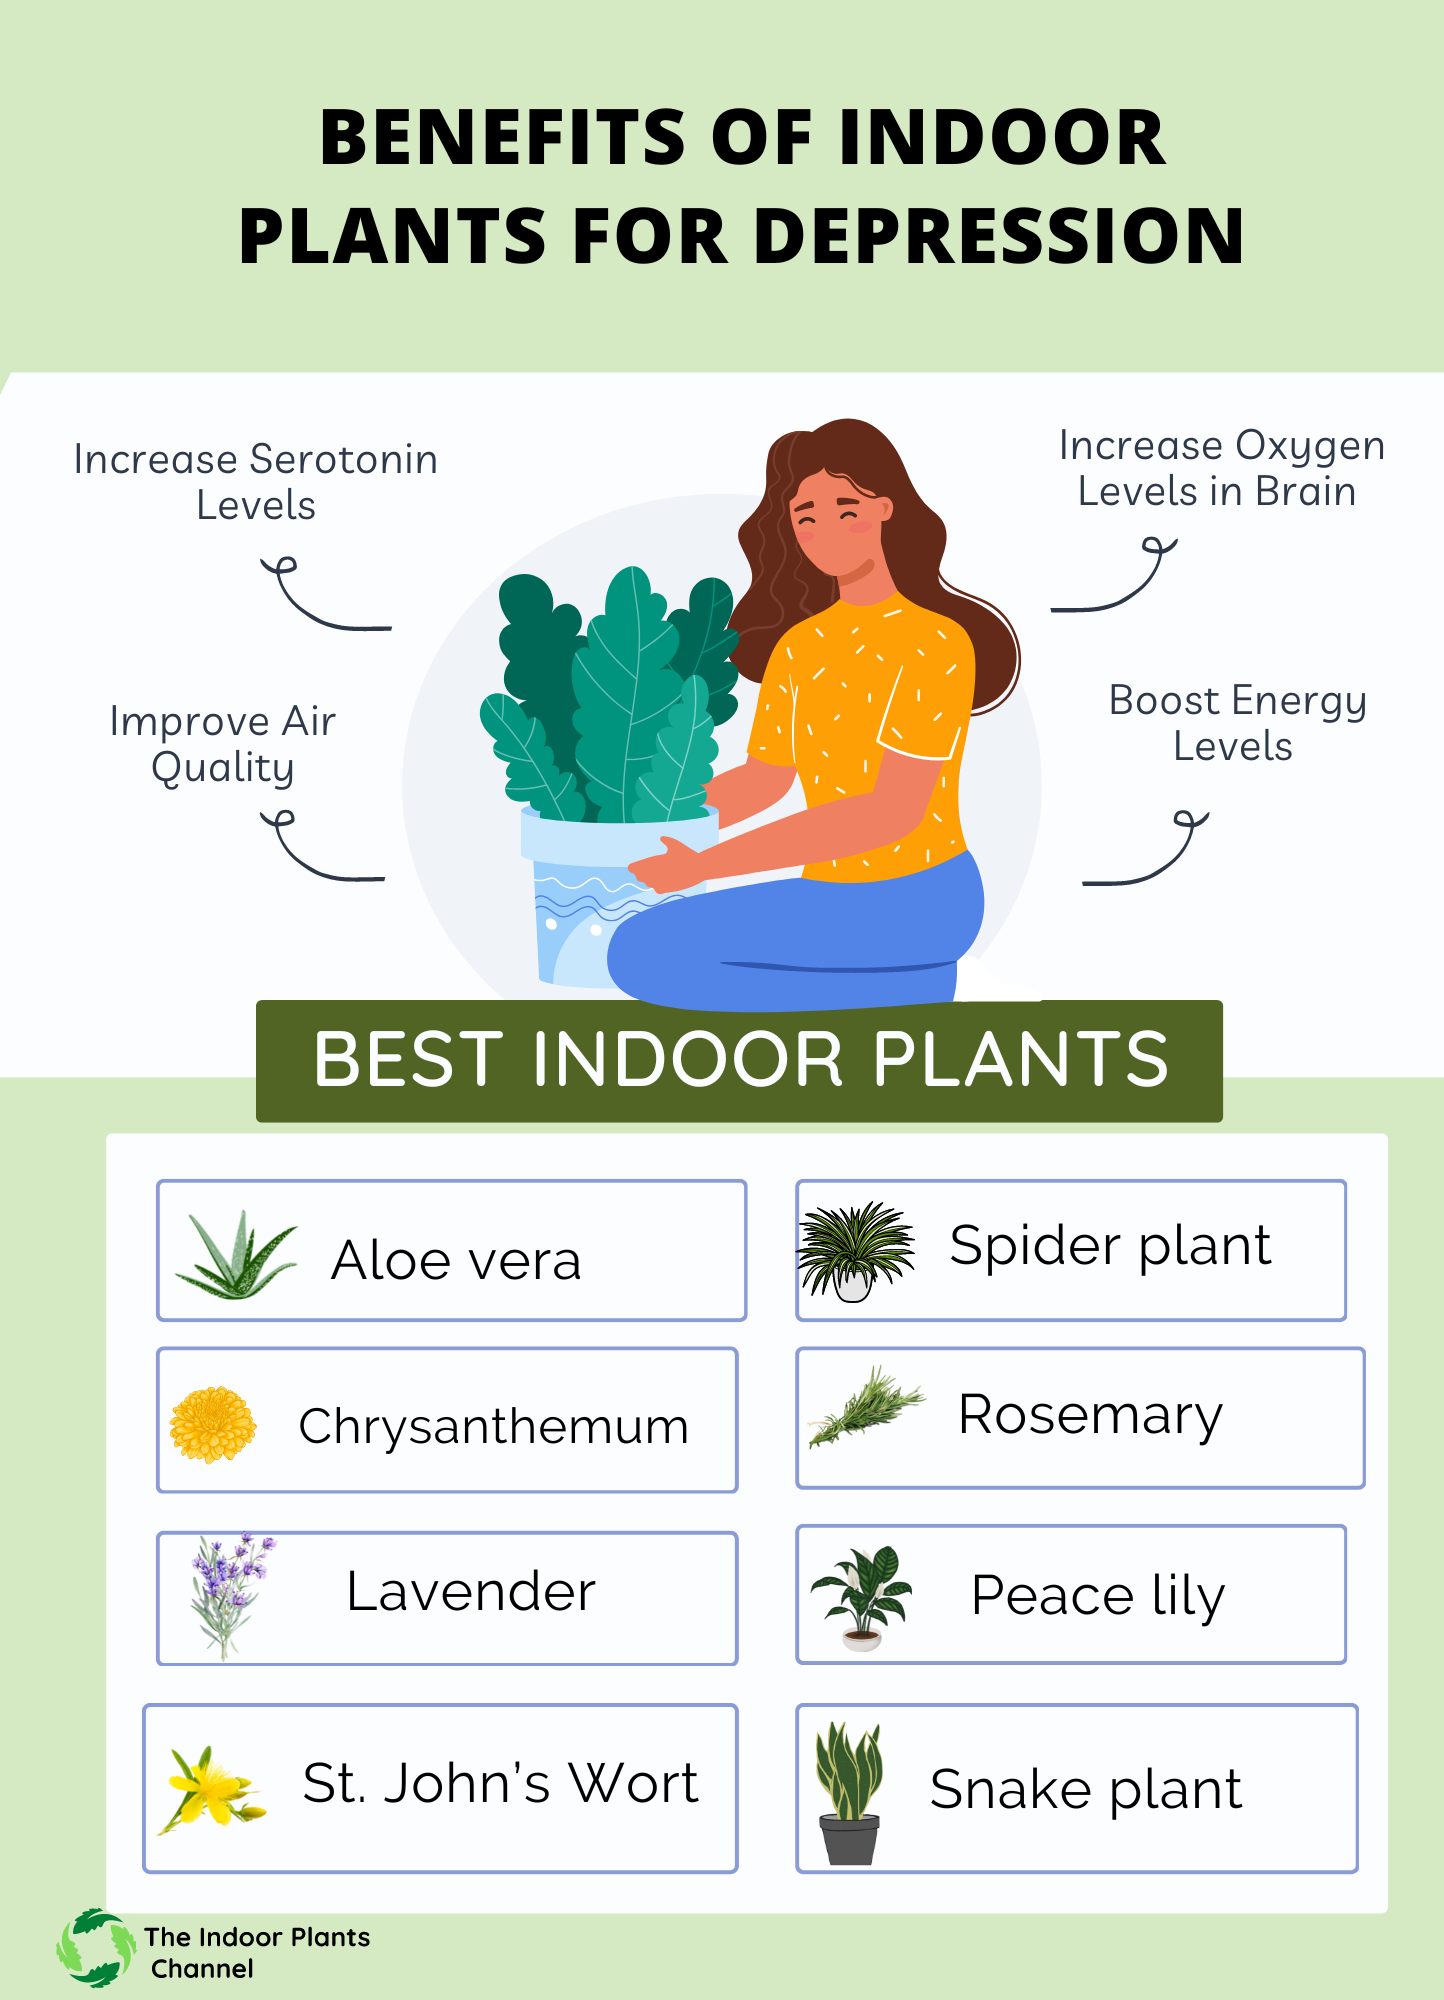 Benefits of indoor plants for depression